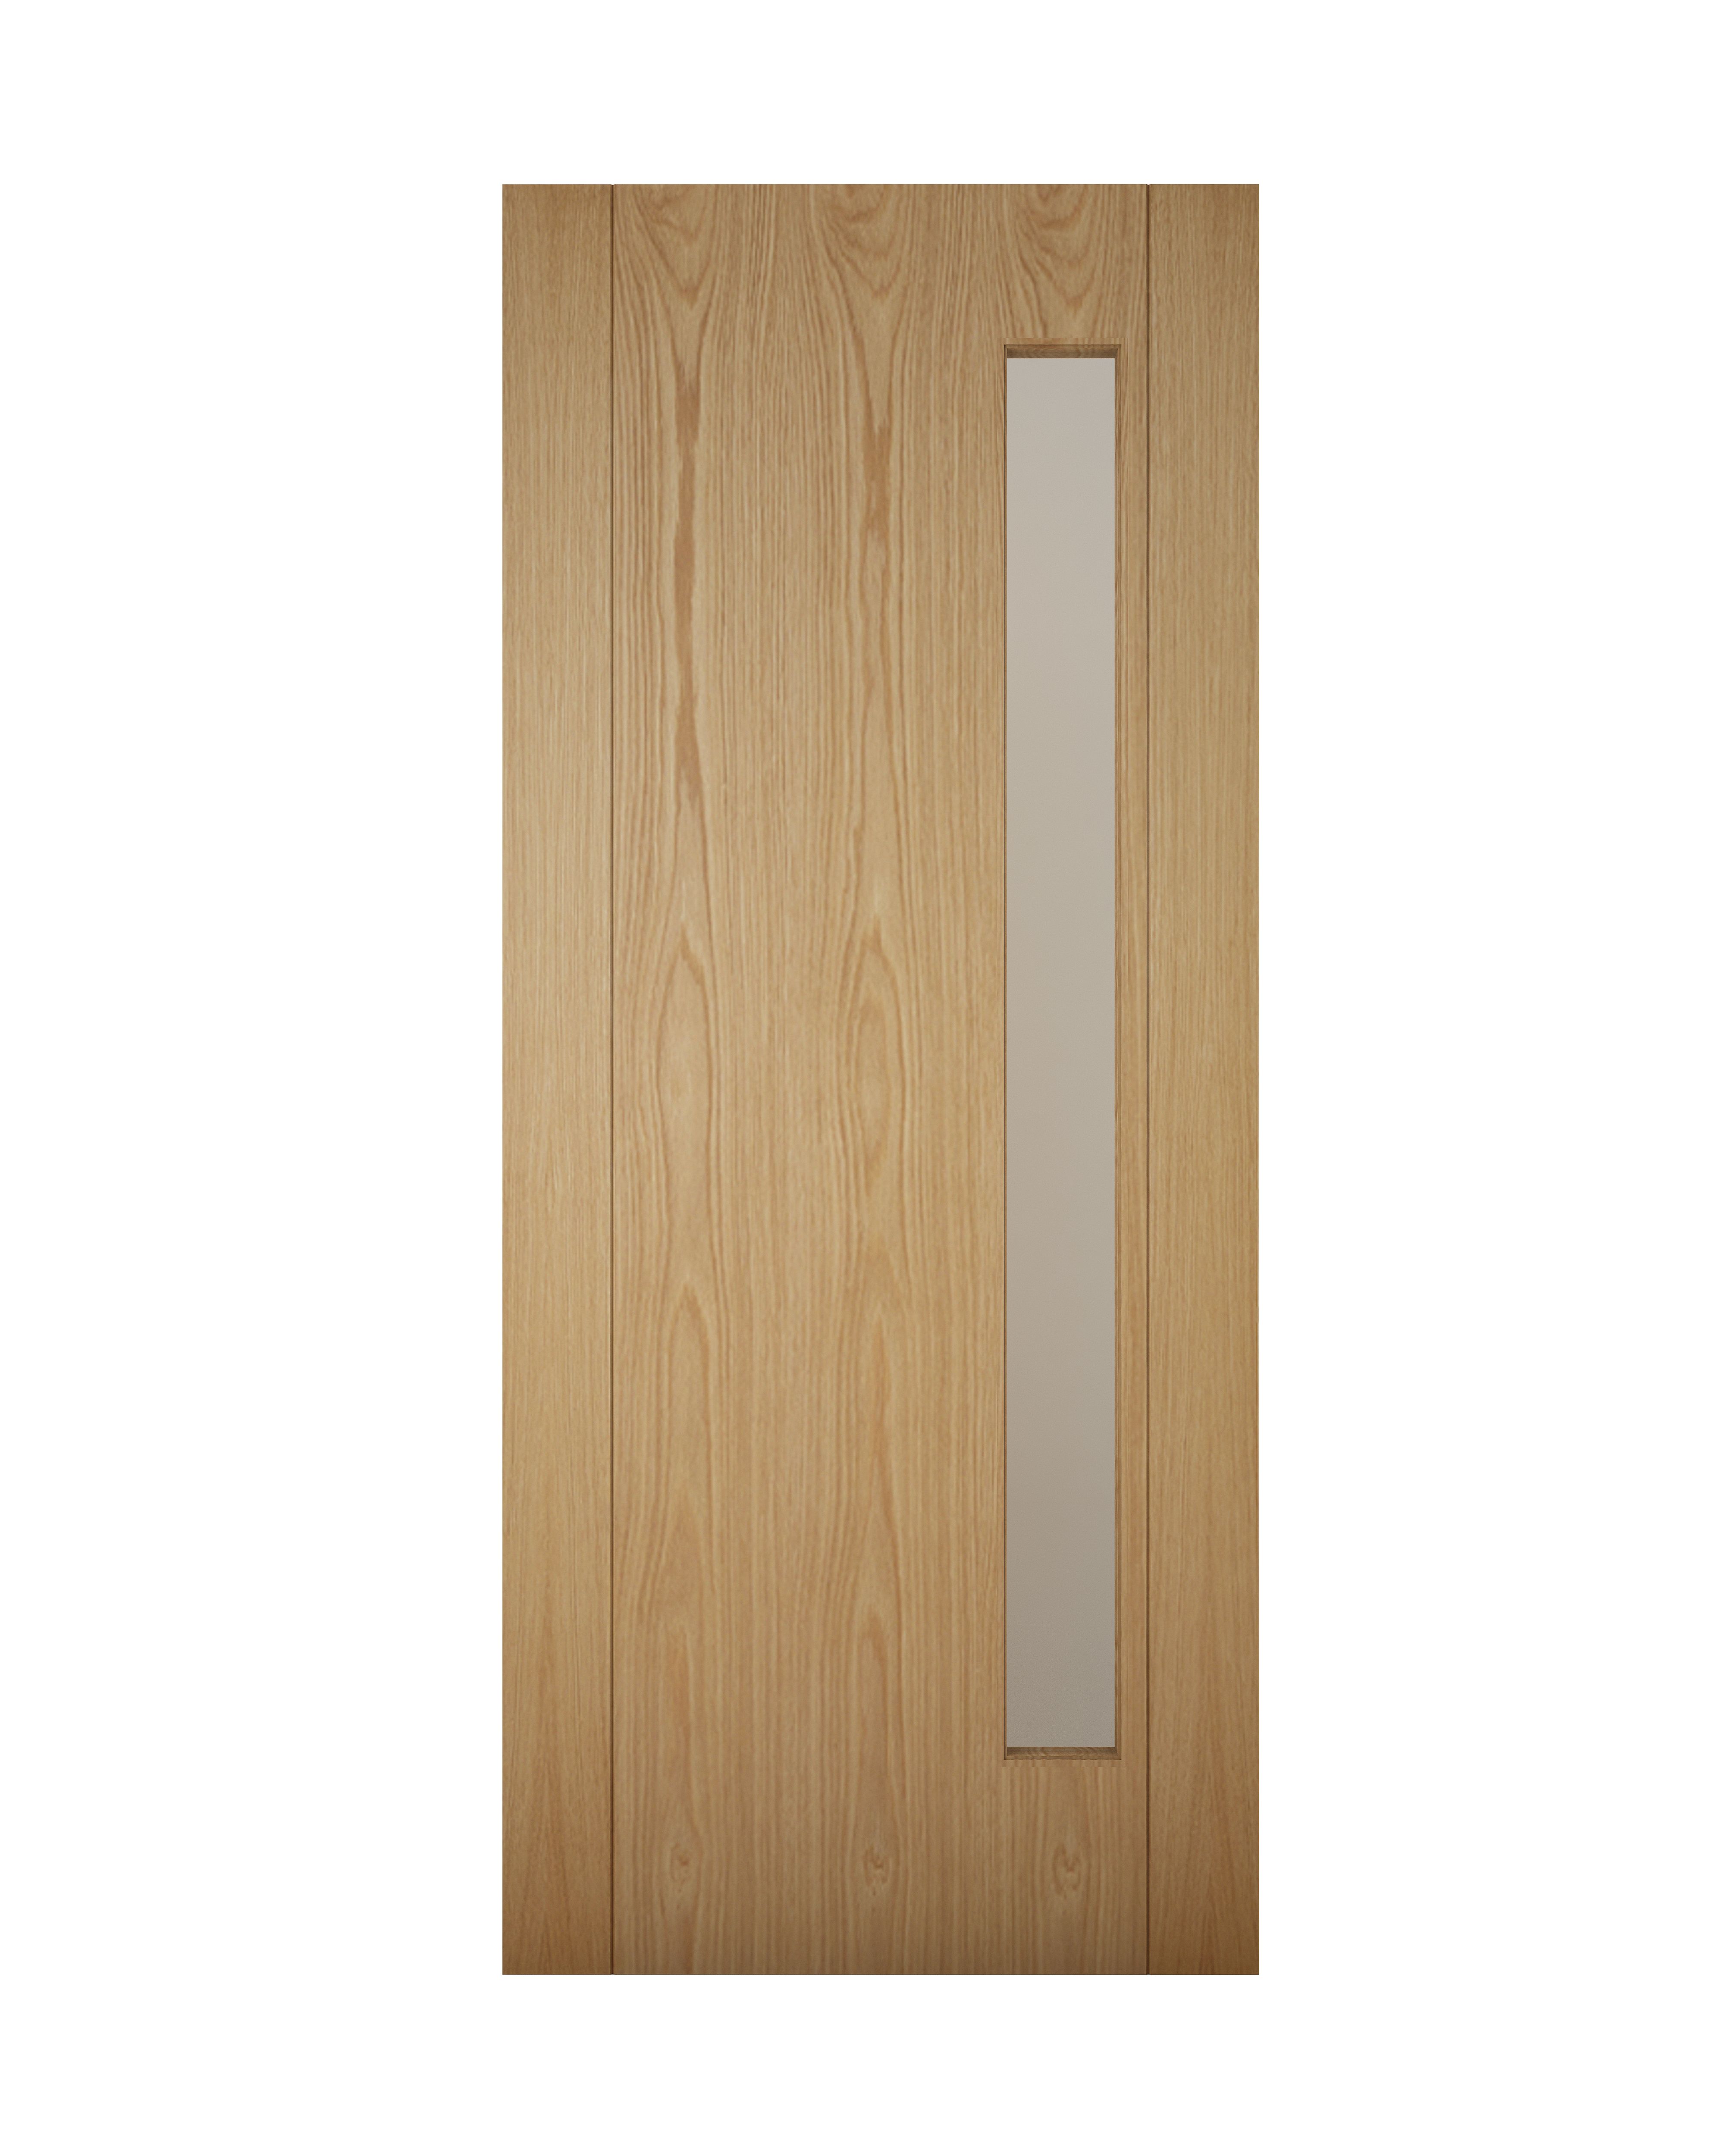 Glazed White oak veneer Left & RHed Front Door set, (H)2074mm (W)856mm